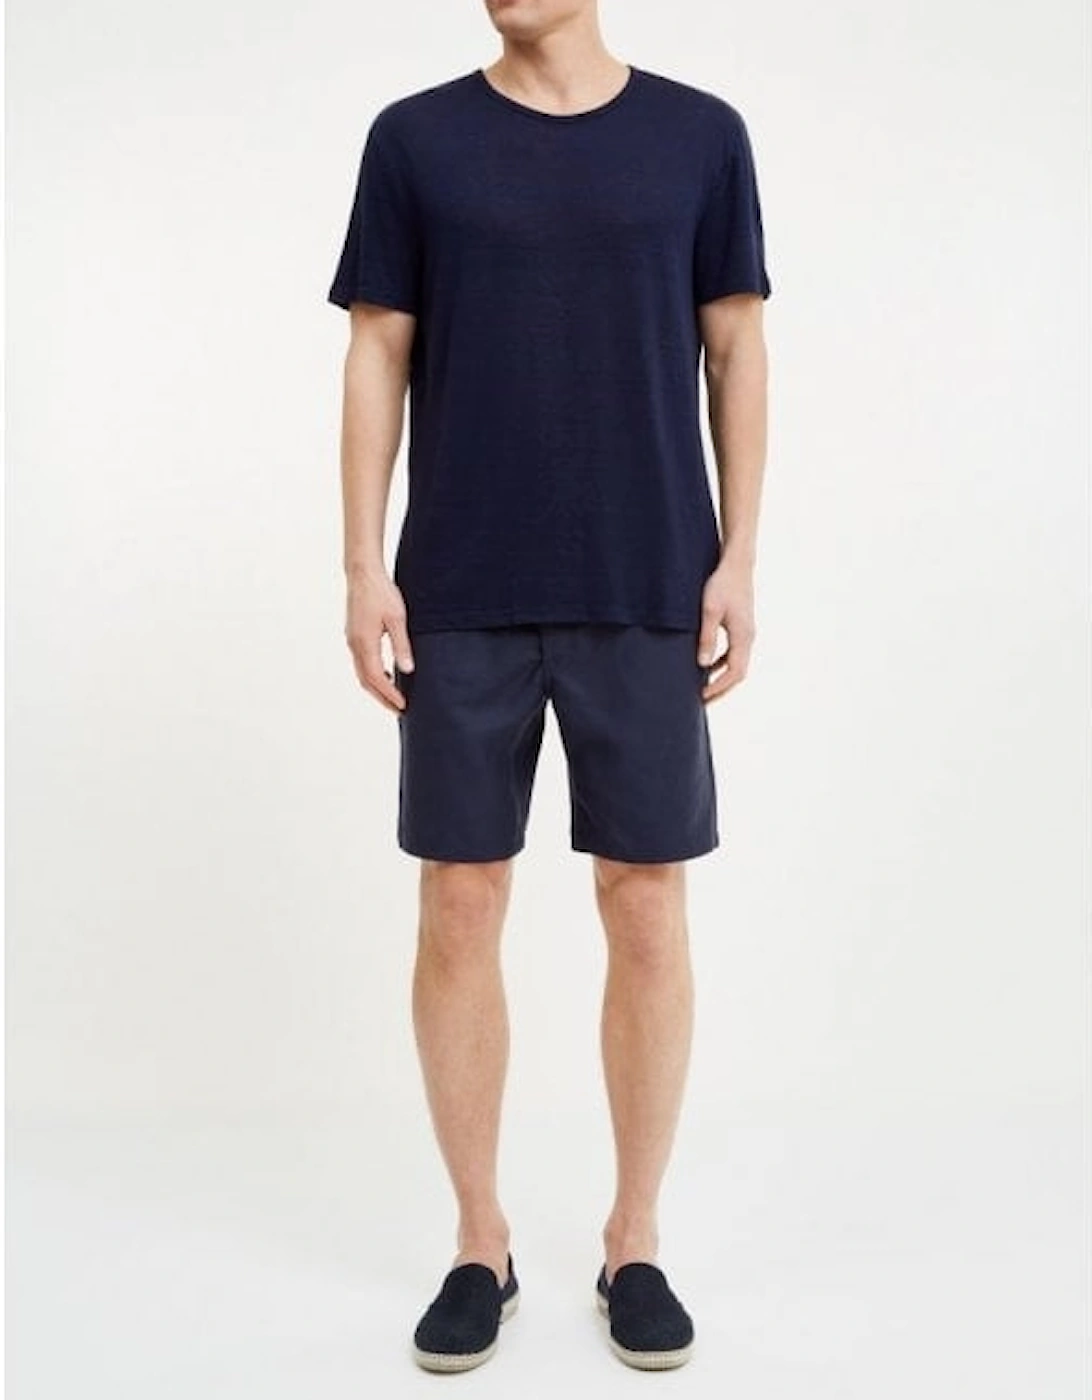 Sydney Linen Shorts, Navy